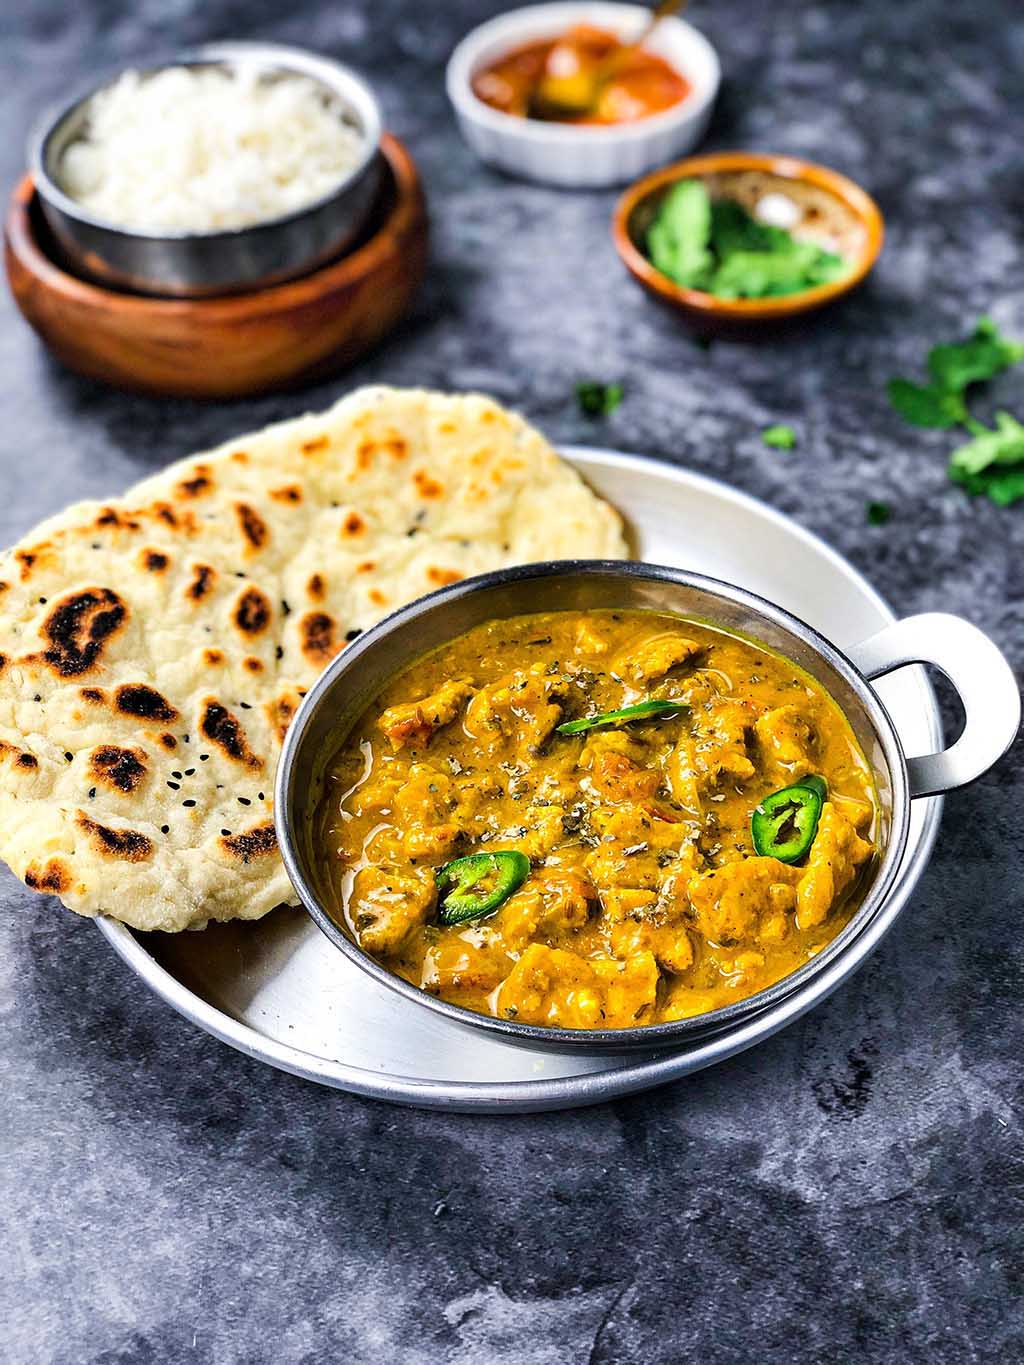 Handi curry